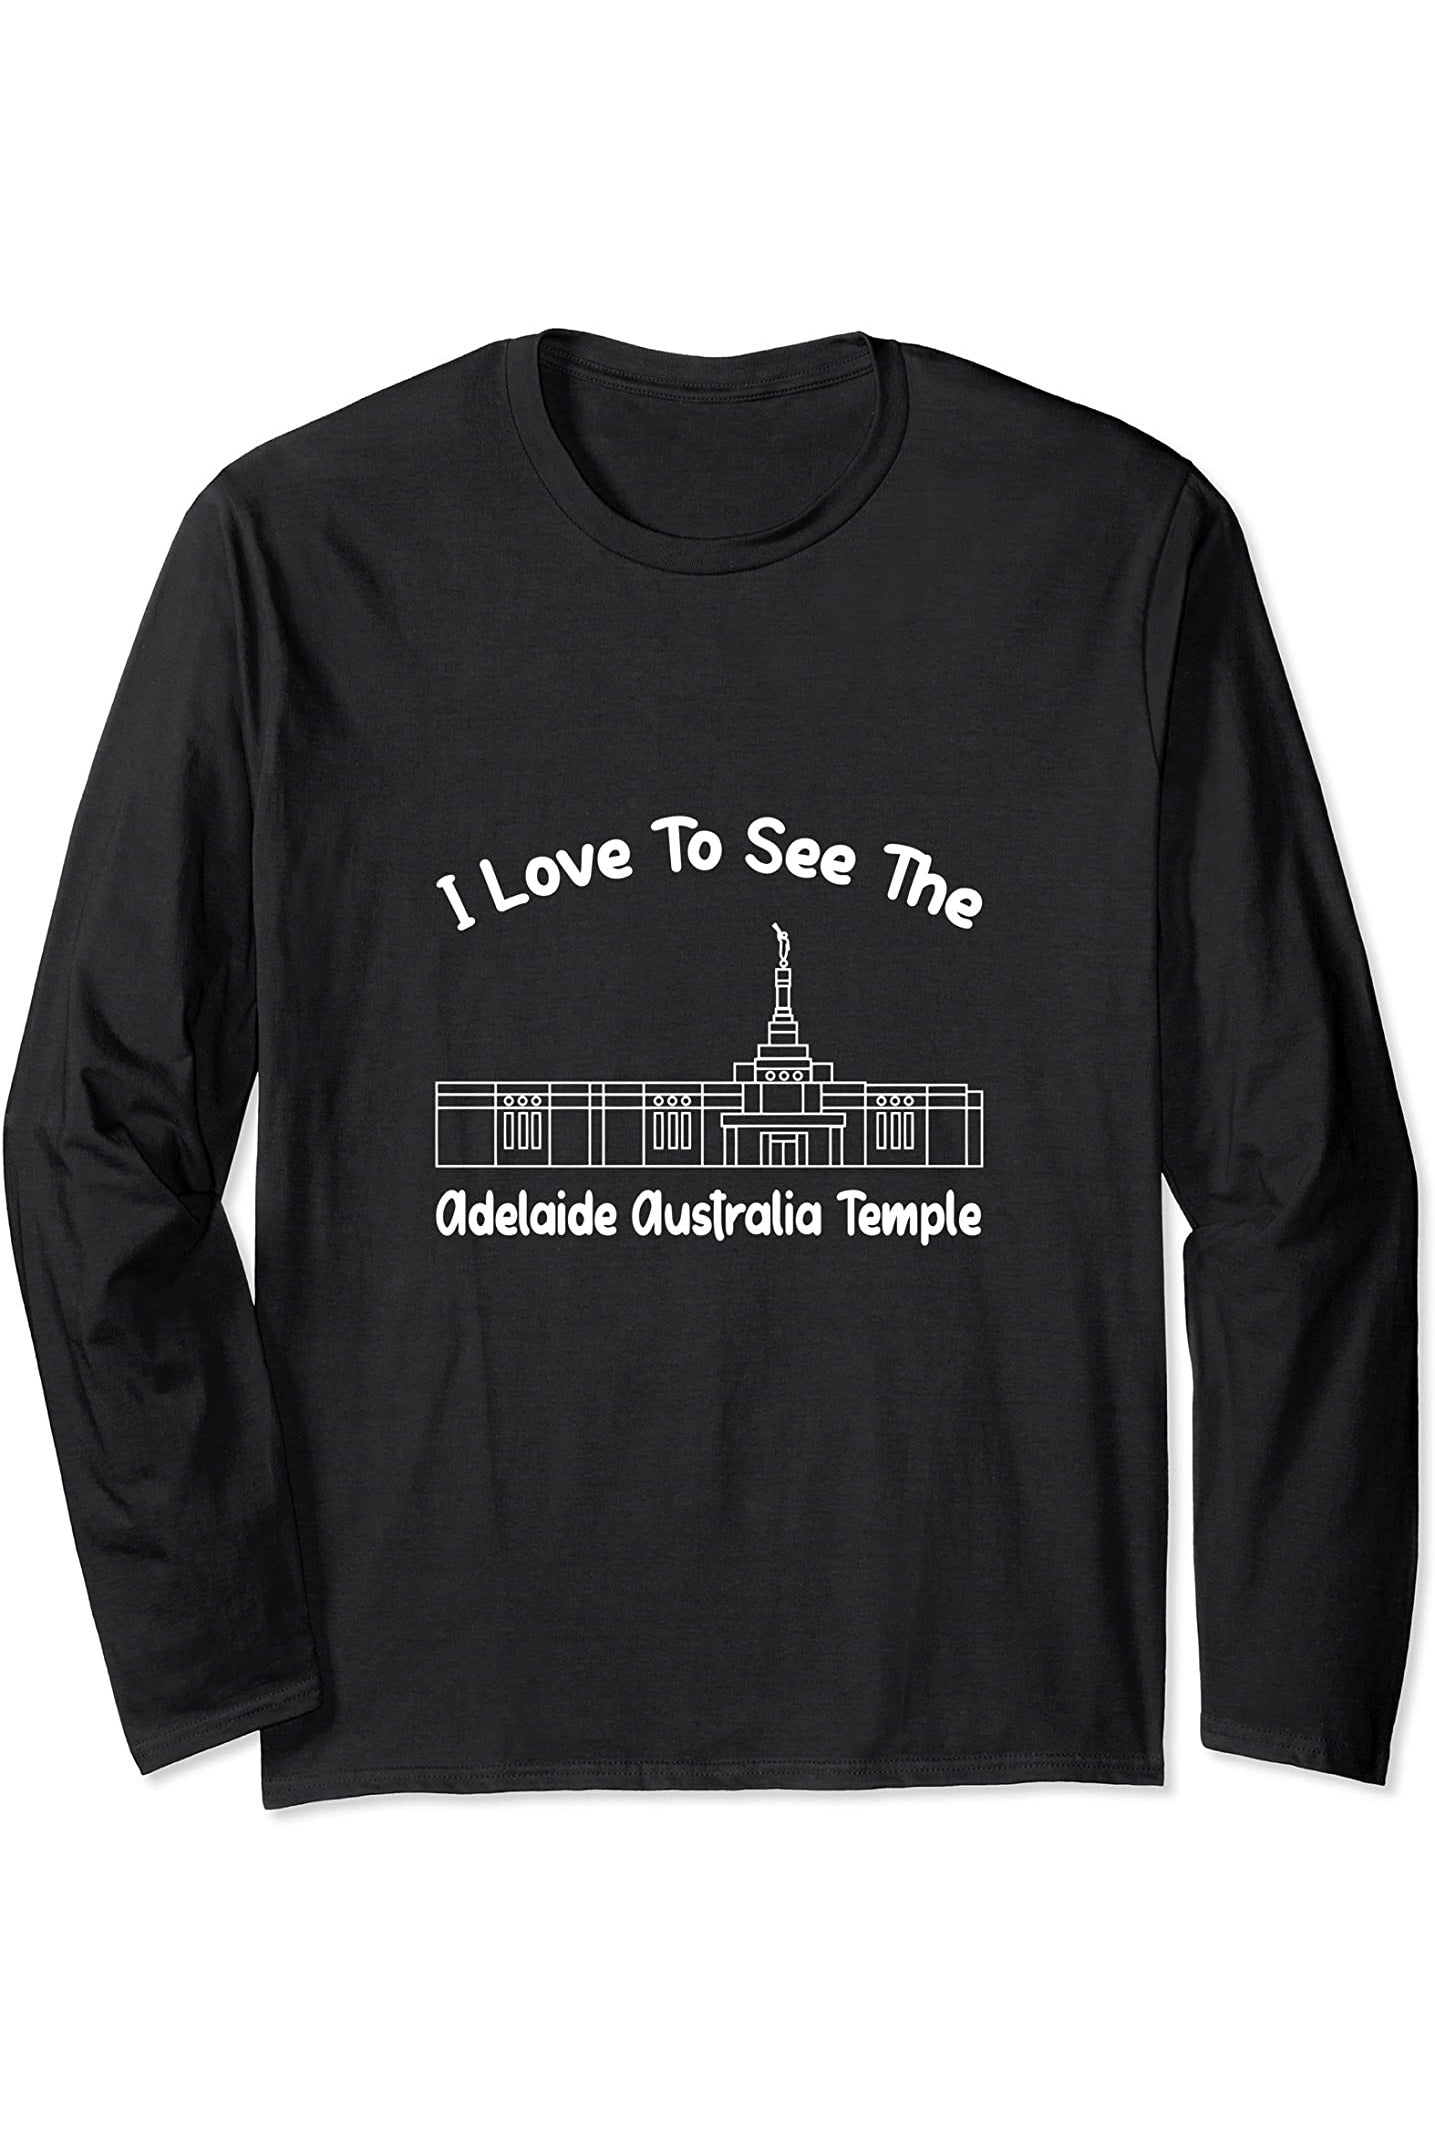 Adelaide Australia Temple Long Sleeve T-Shirt - Primary Style (English) US